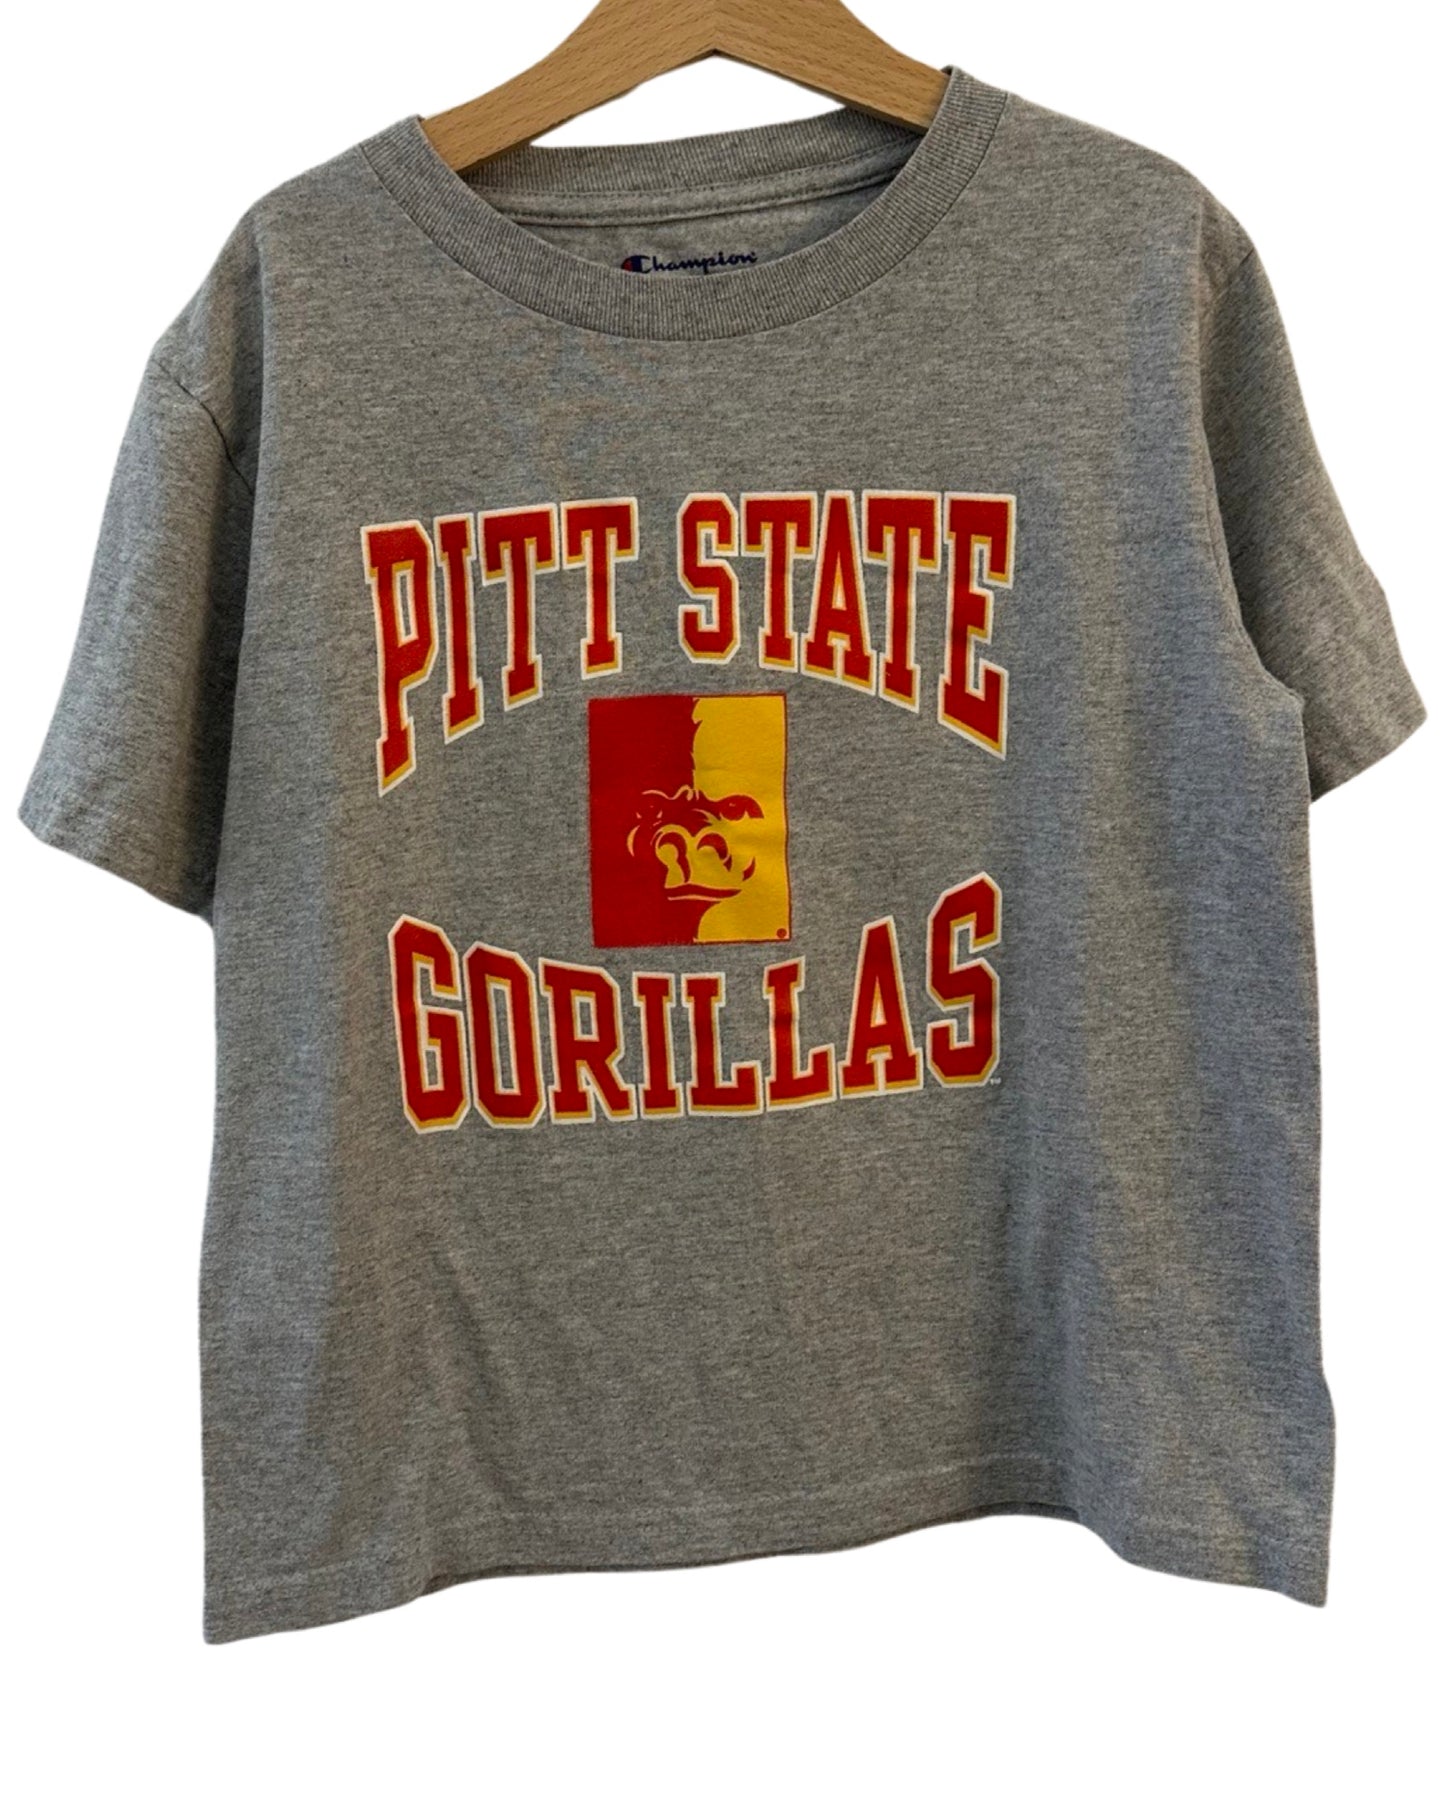 Vintage Champion Pitt State Gorillas t shirt (5-6yrs)